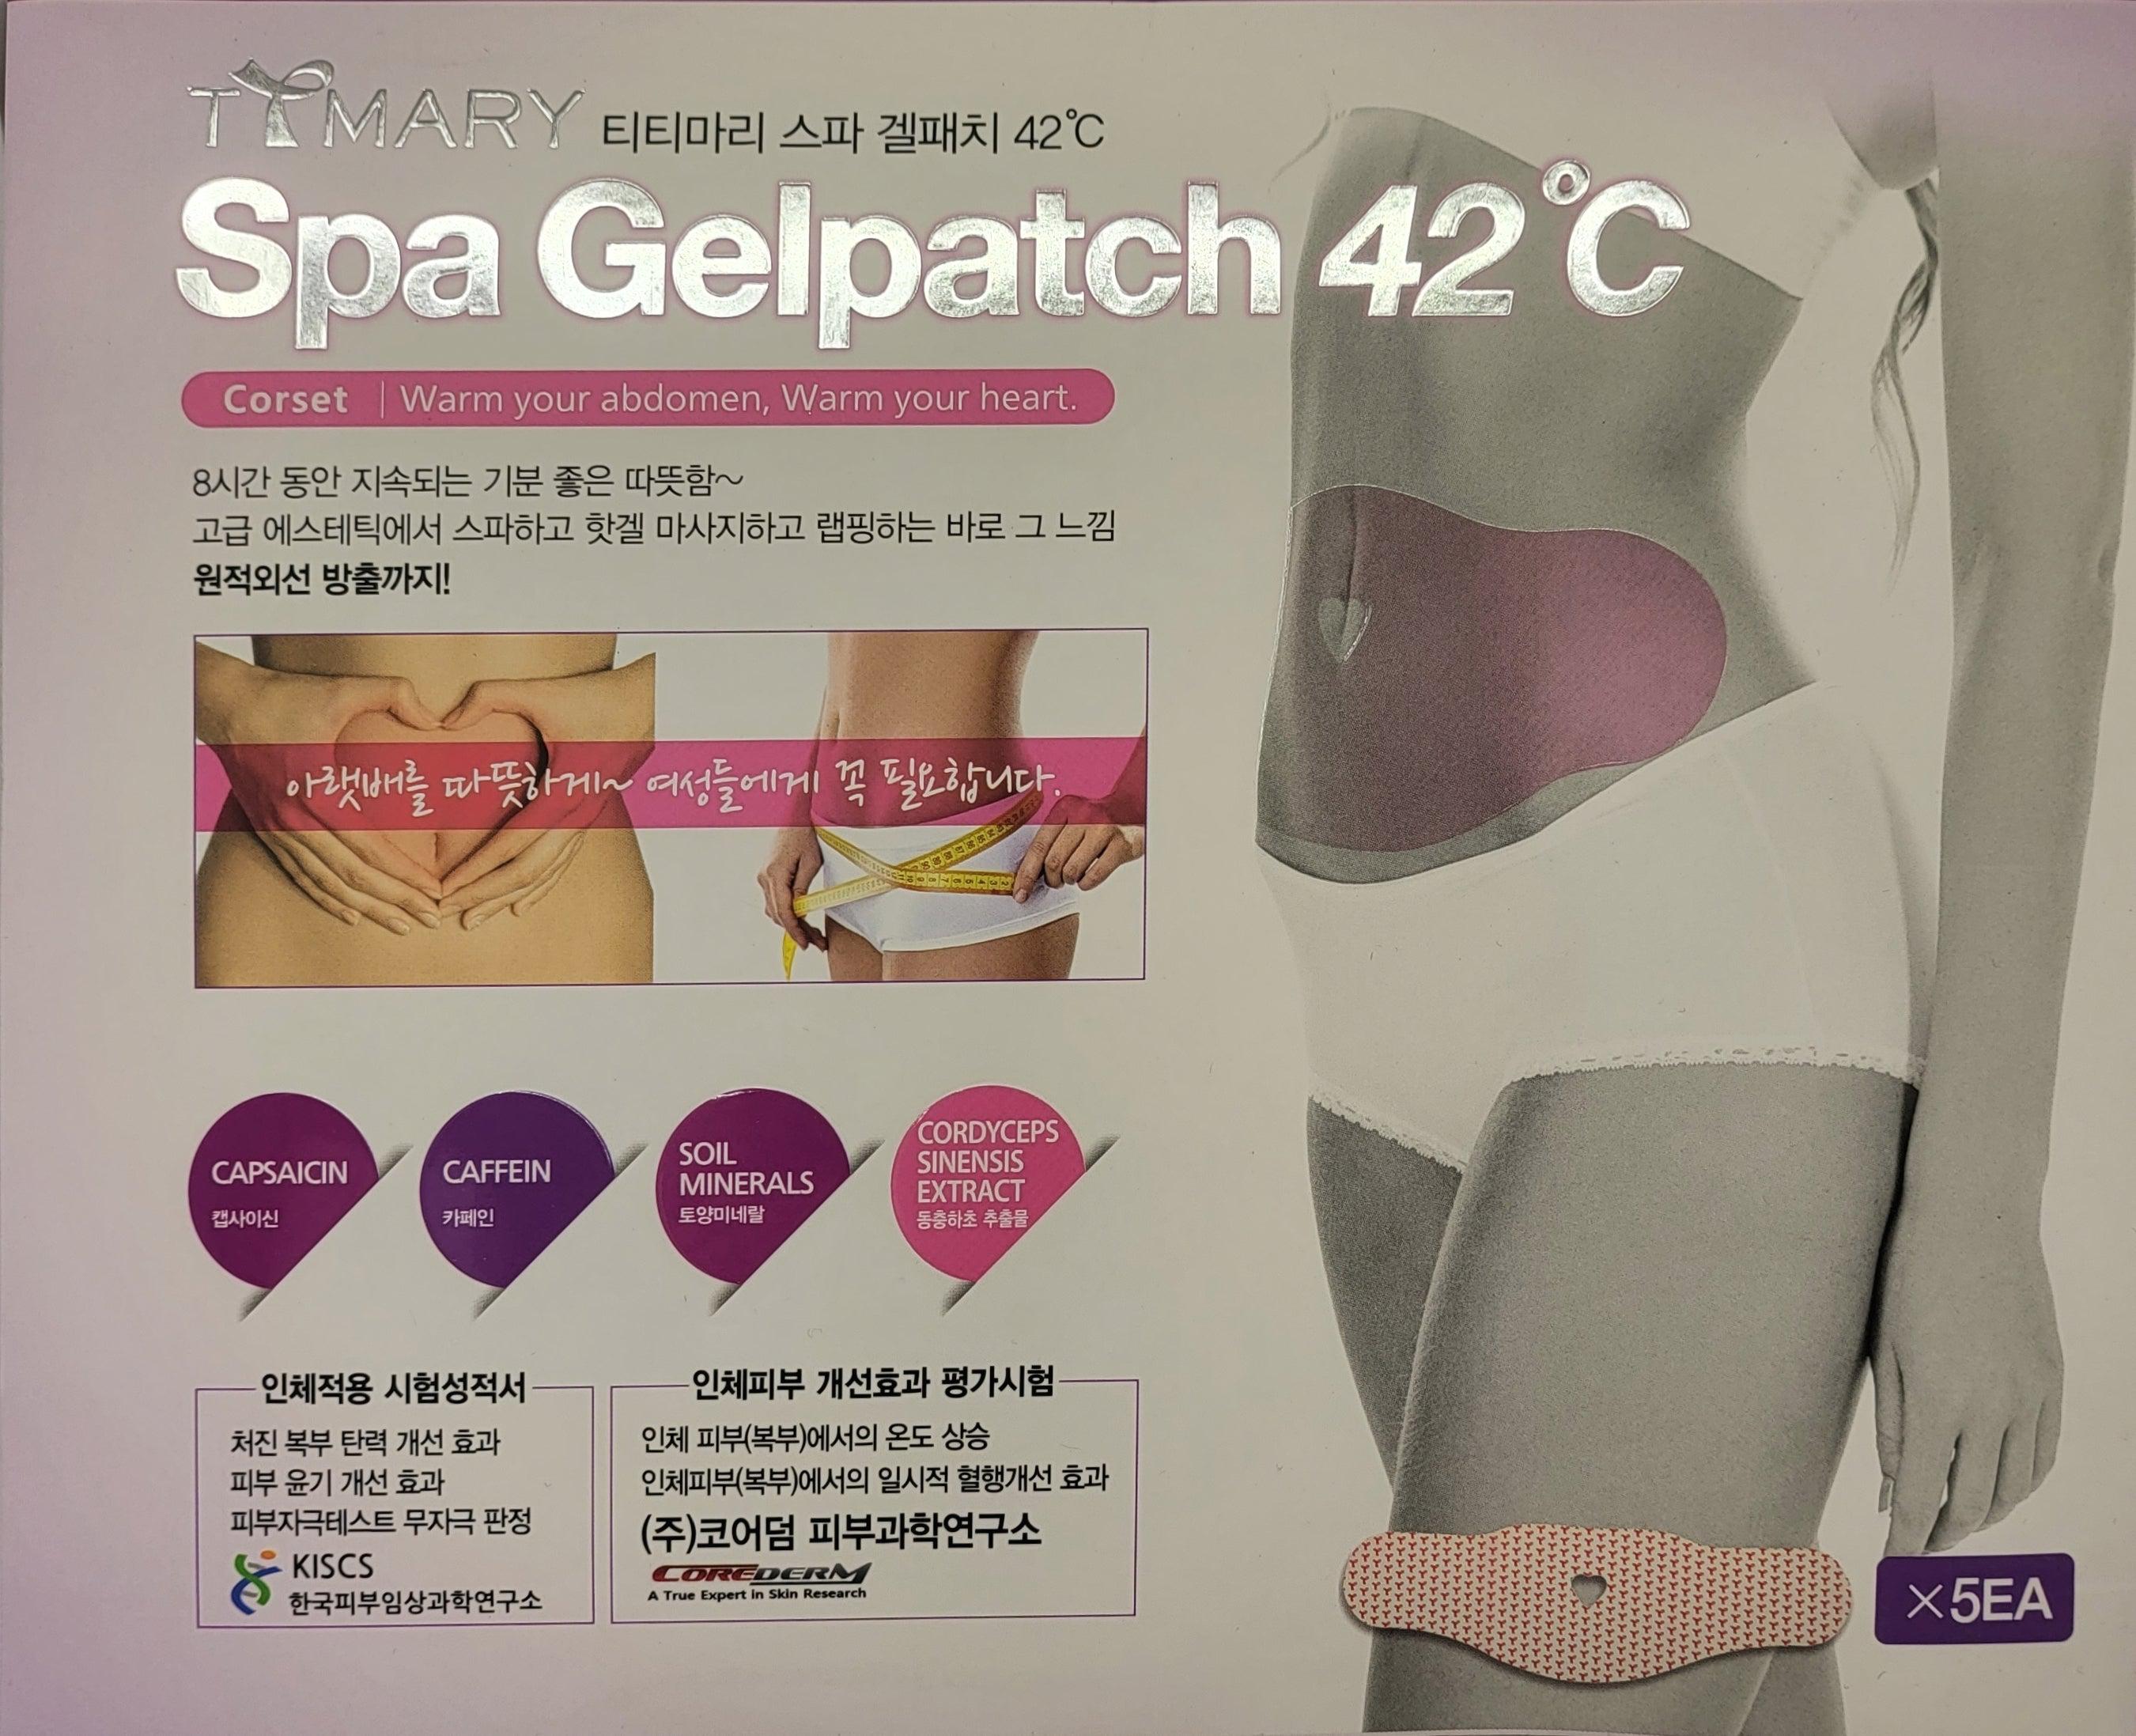 Korean TTMARY Spa Gelpatch 42 degrees warm your abdomen